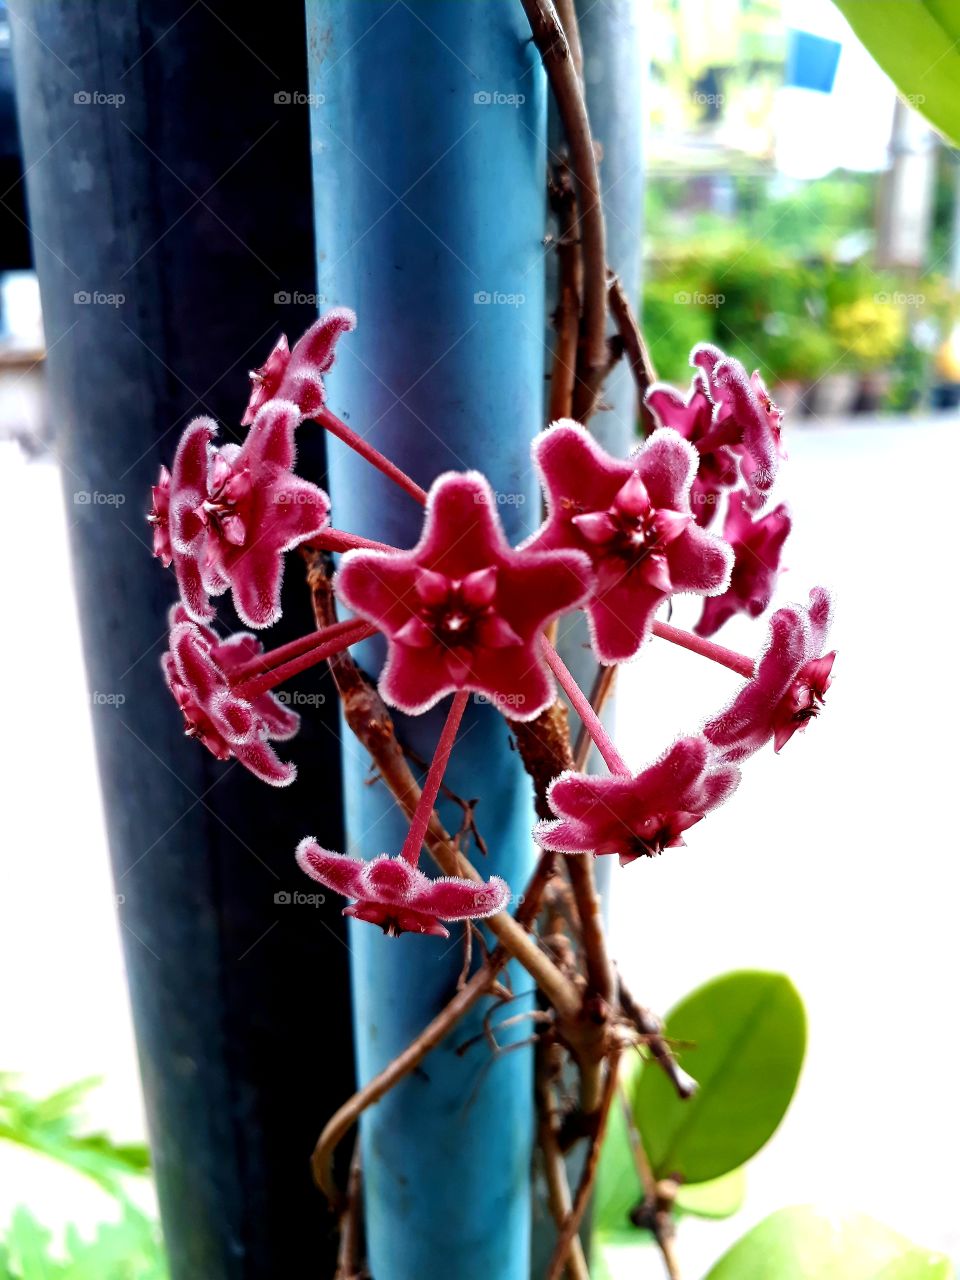 Star Flower